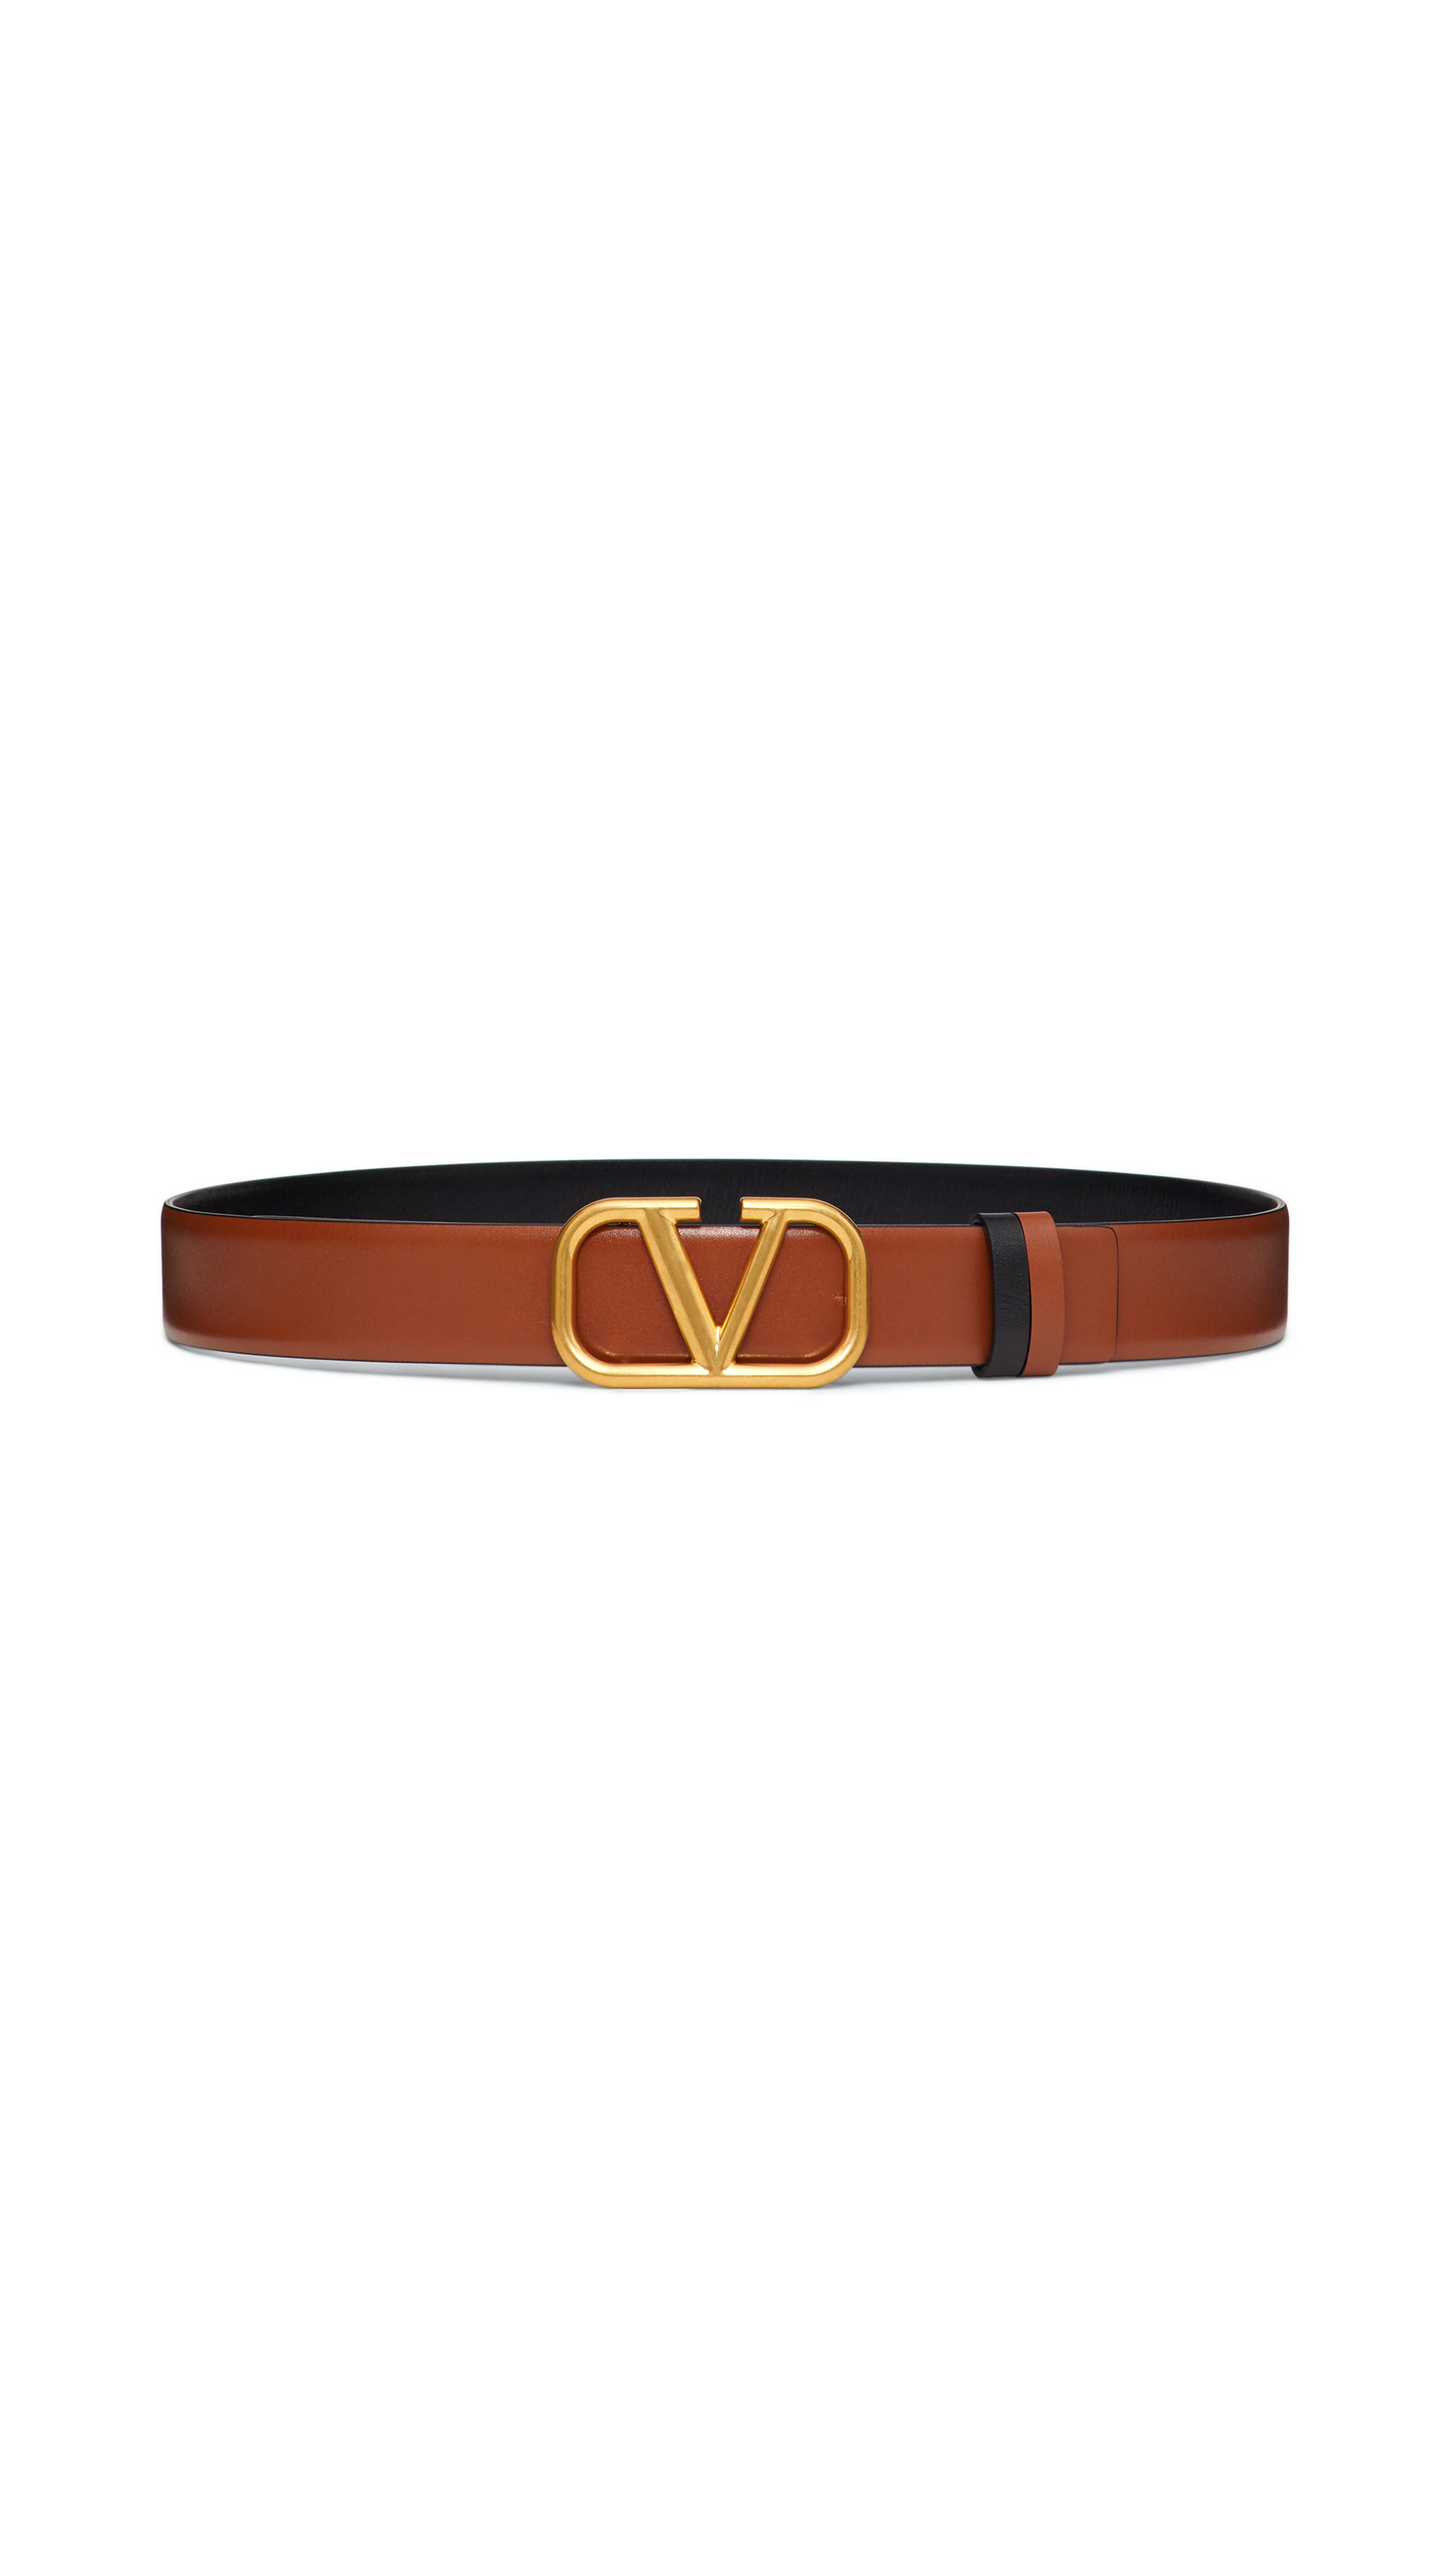 VLogo Signature Reversible Belt in Shiny Calfskin Leather - Black / Saddle Brown